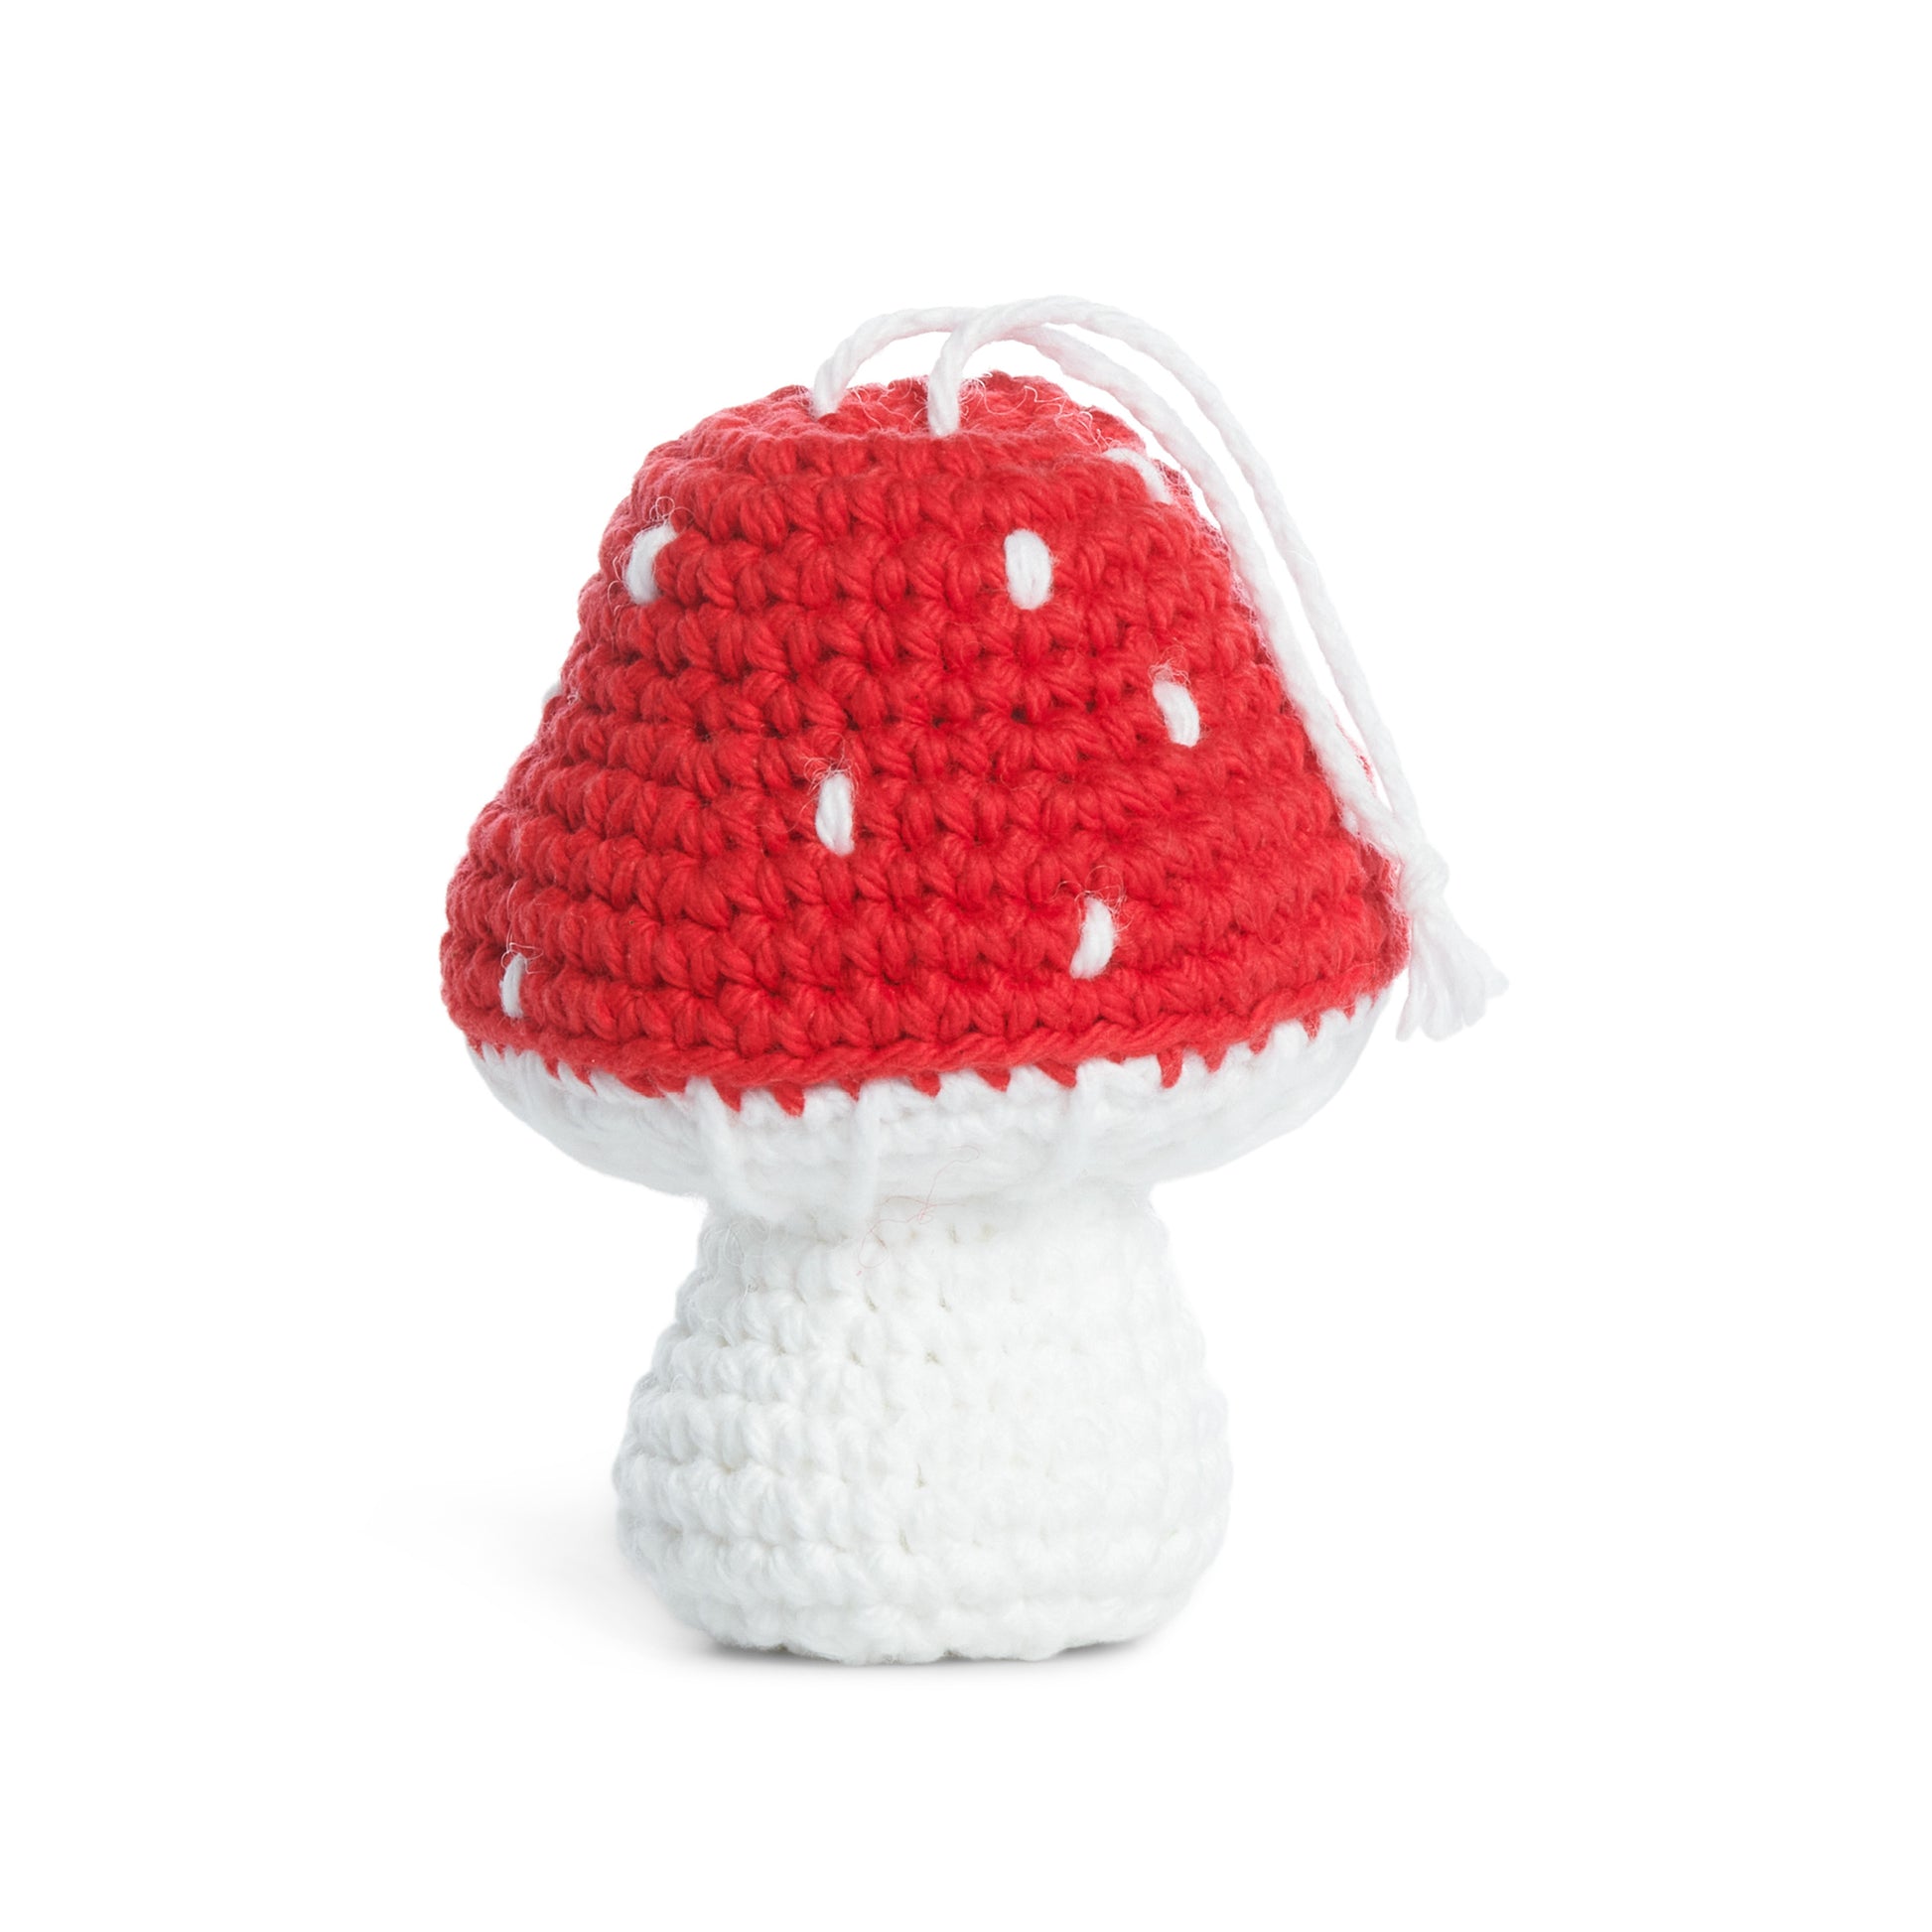 Free Lily Fun Little Guys Crochet Mushroom Ornaments Pattern